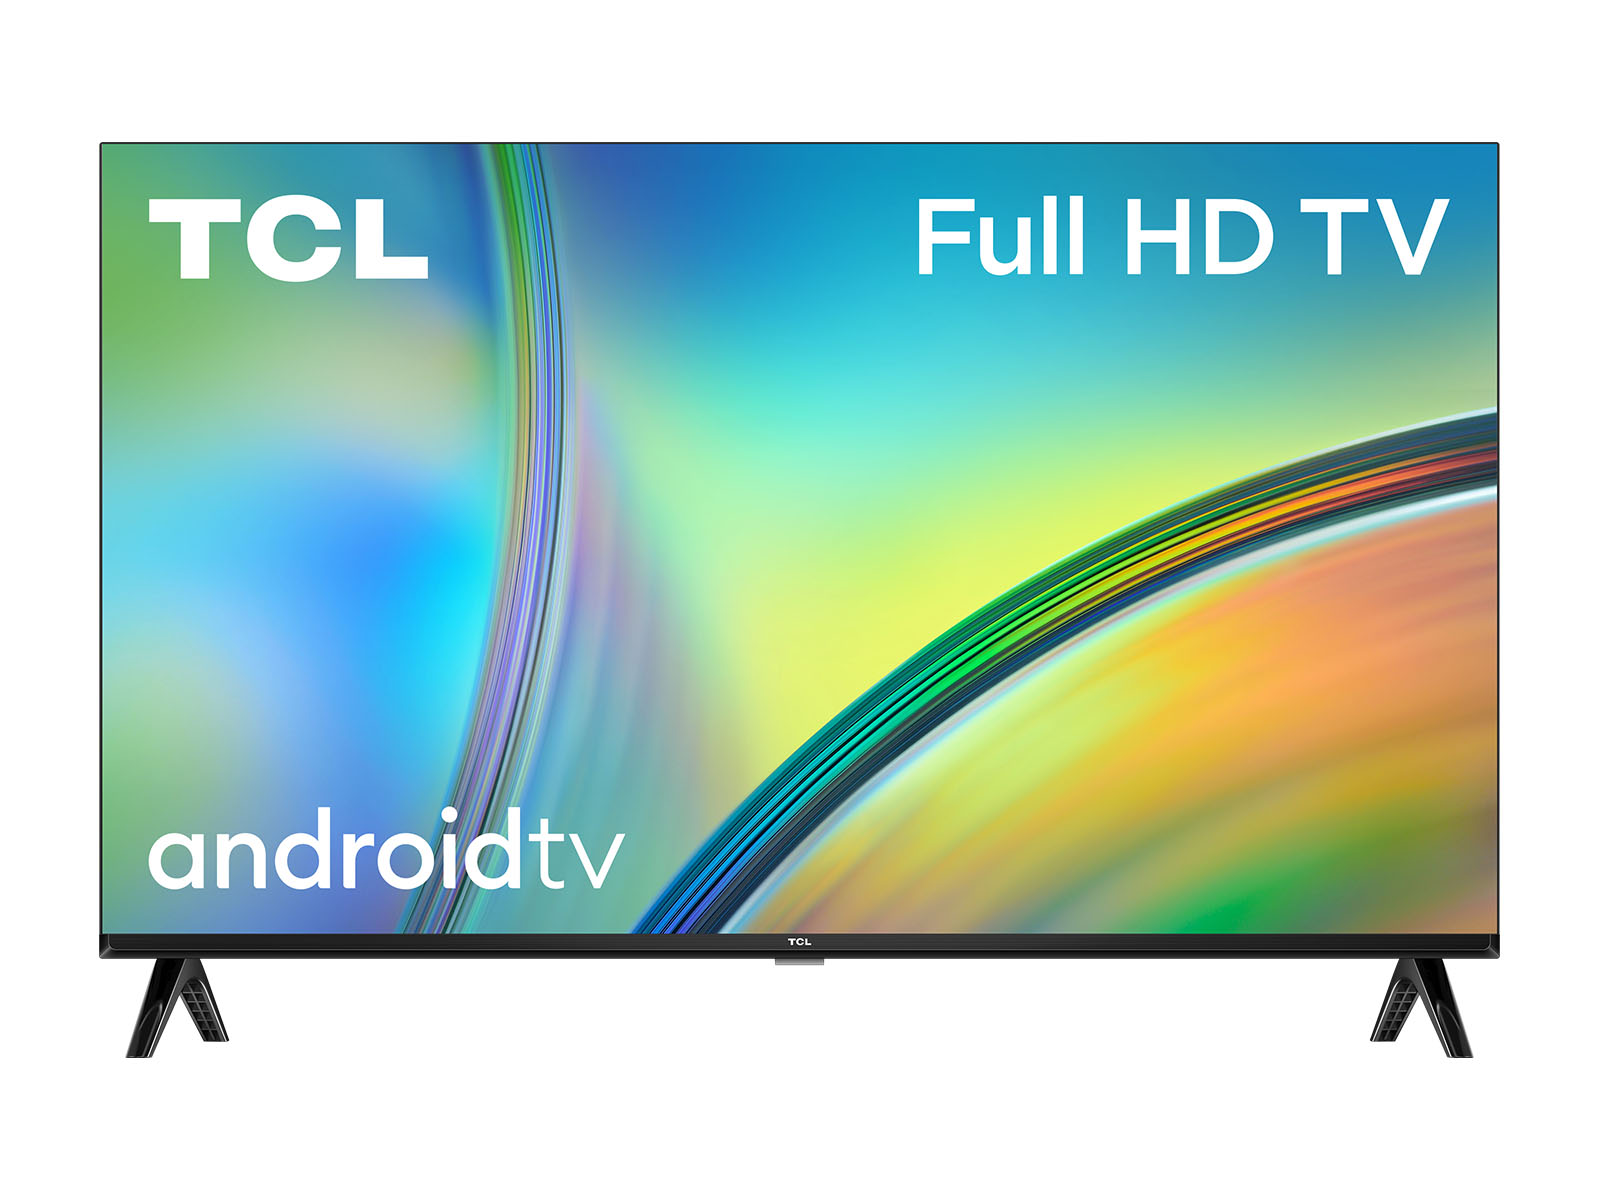 32-Inch Redmi Smart TV: A big entertainment upgrade at